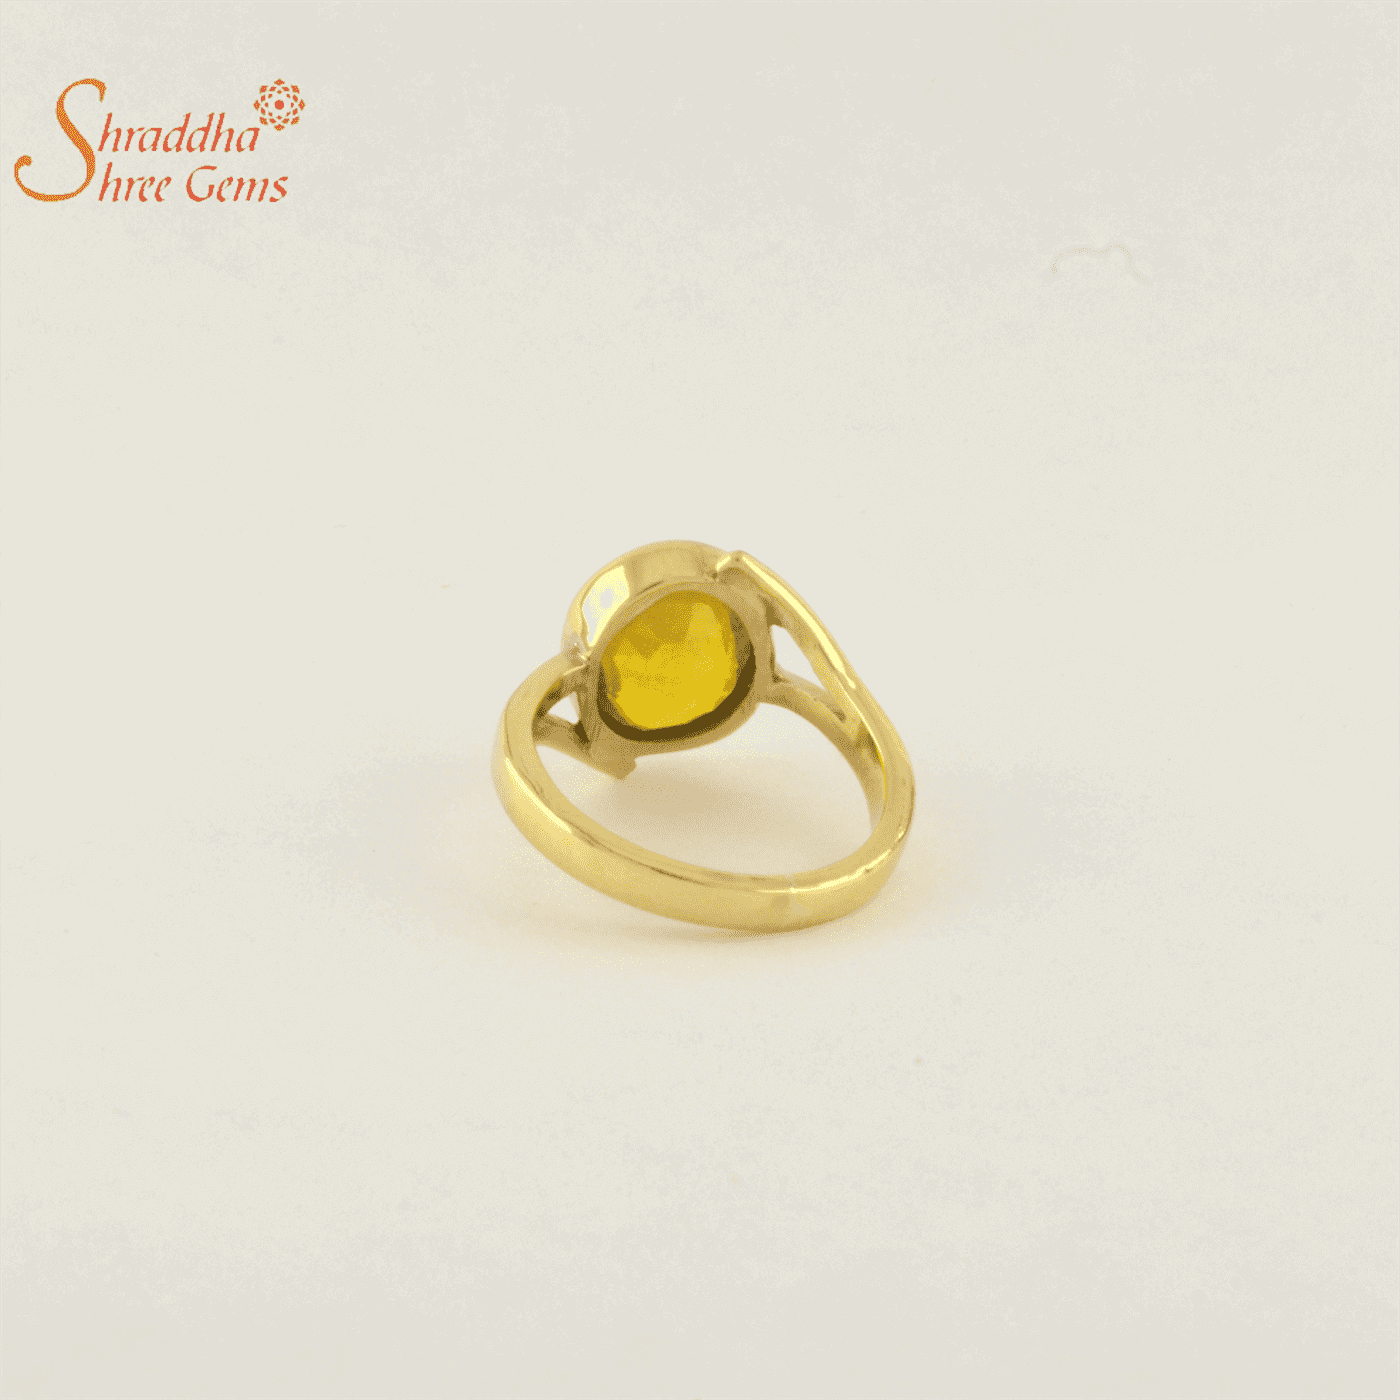 How to Wear a Pukhraj (Yellow Sapphire) Gemstone - Navratan.com